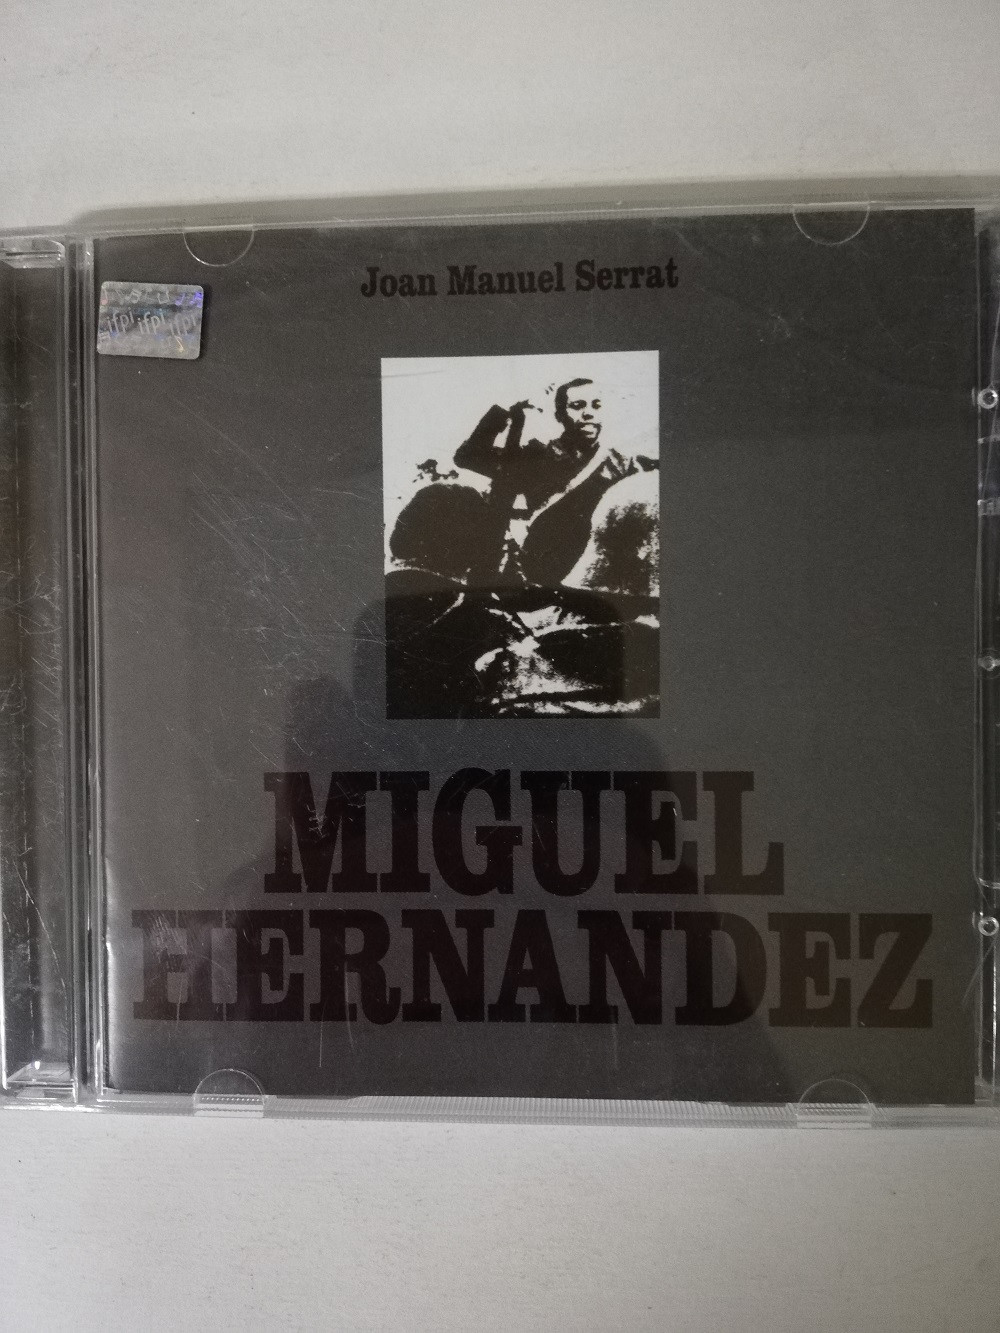 Imagen CD JOAN MANUEL SERRAT - MIGUEL HERNANDEZ